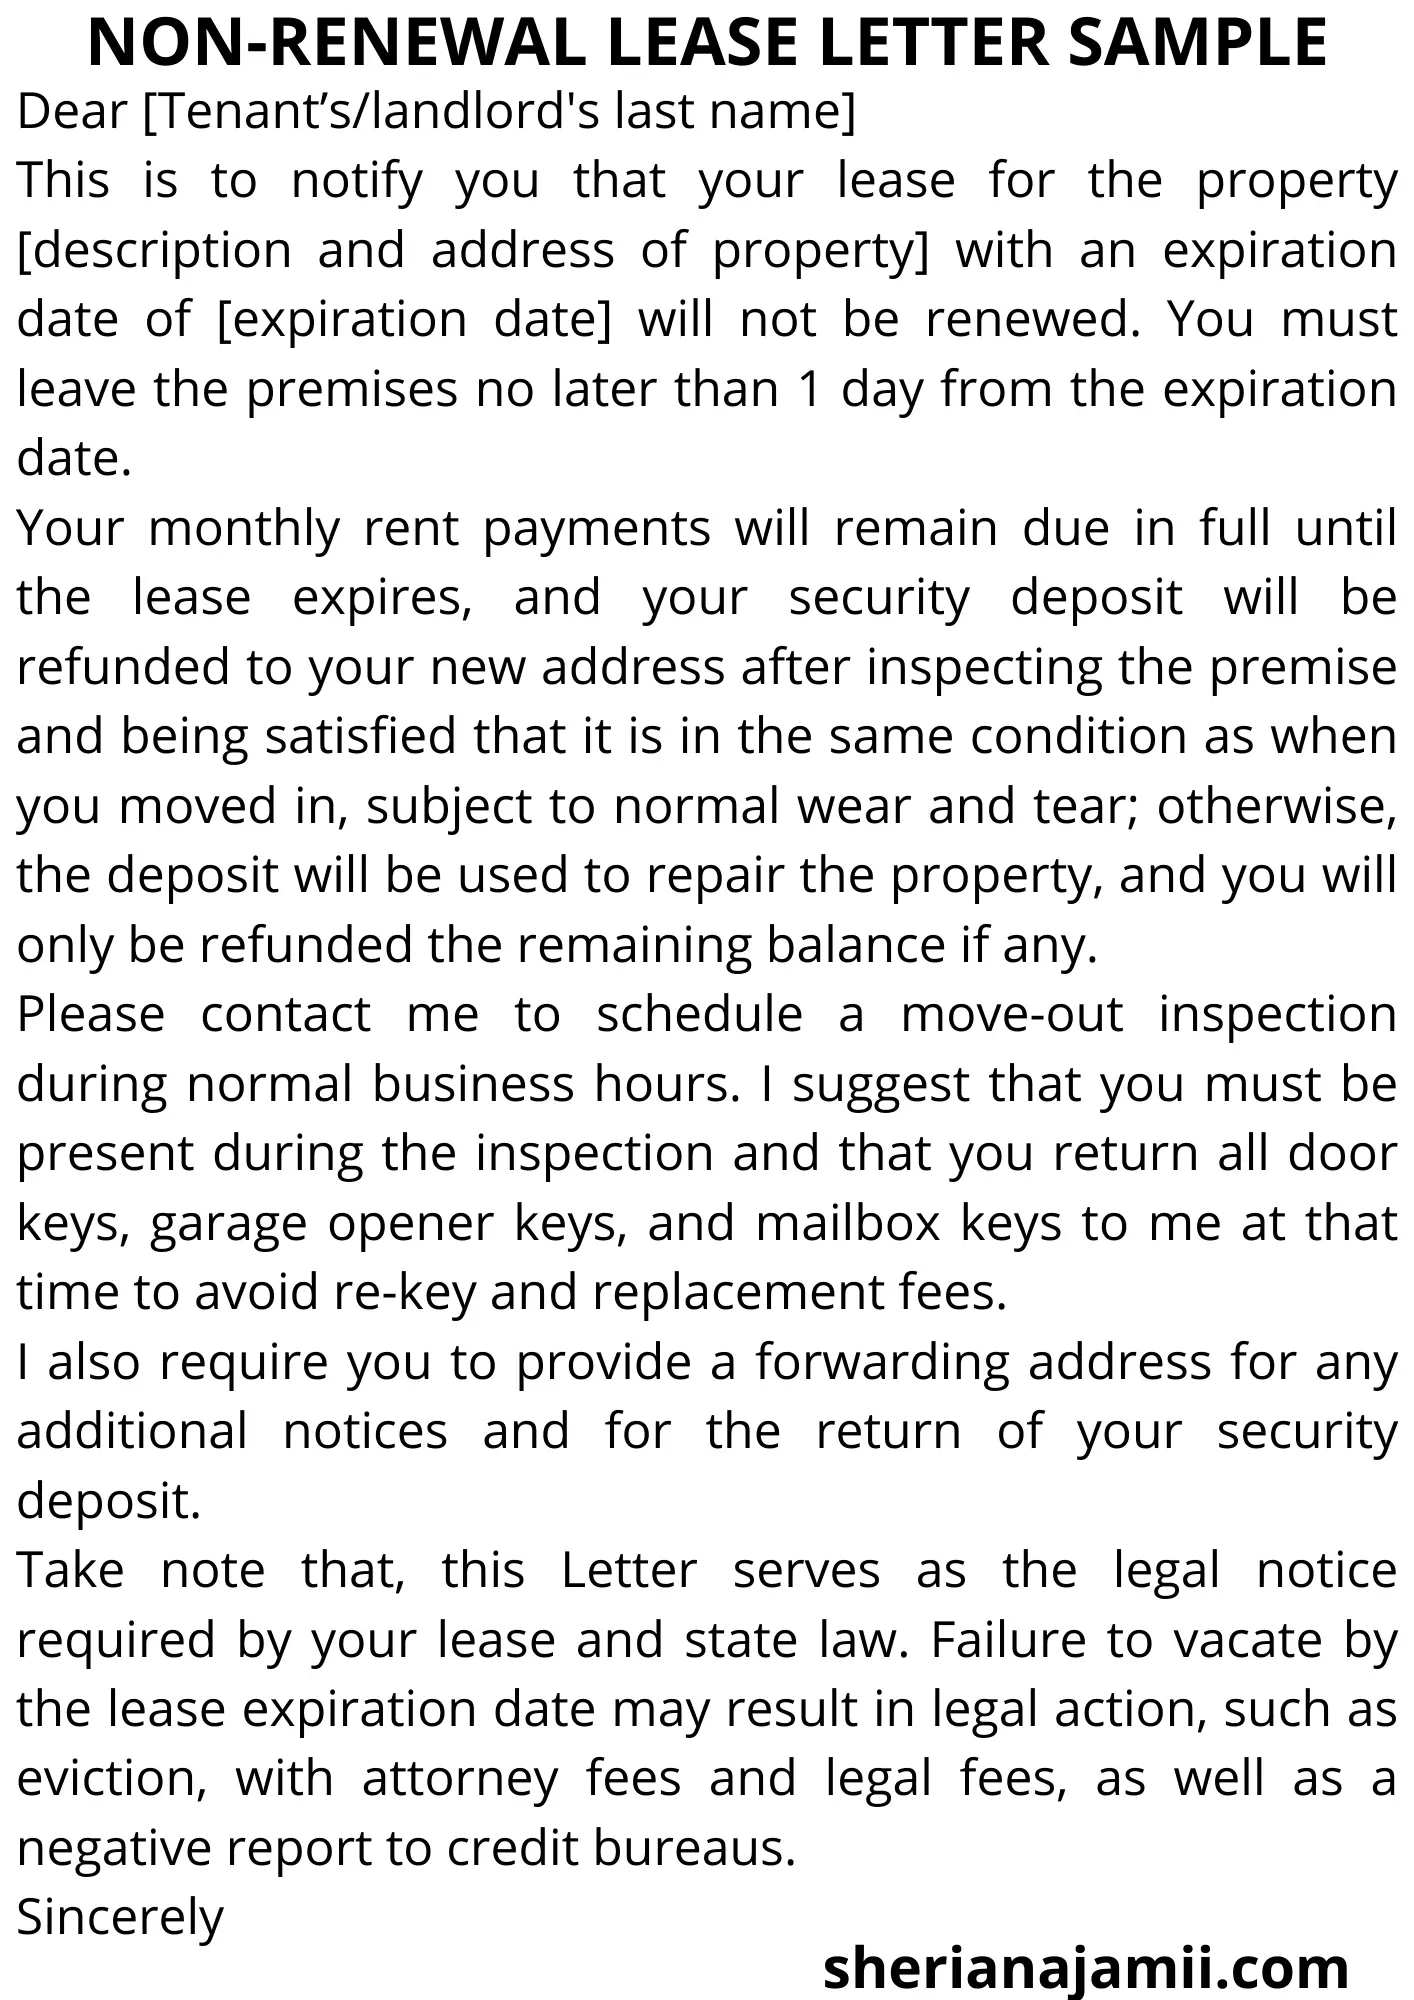 non renewal lease letter sample